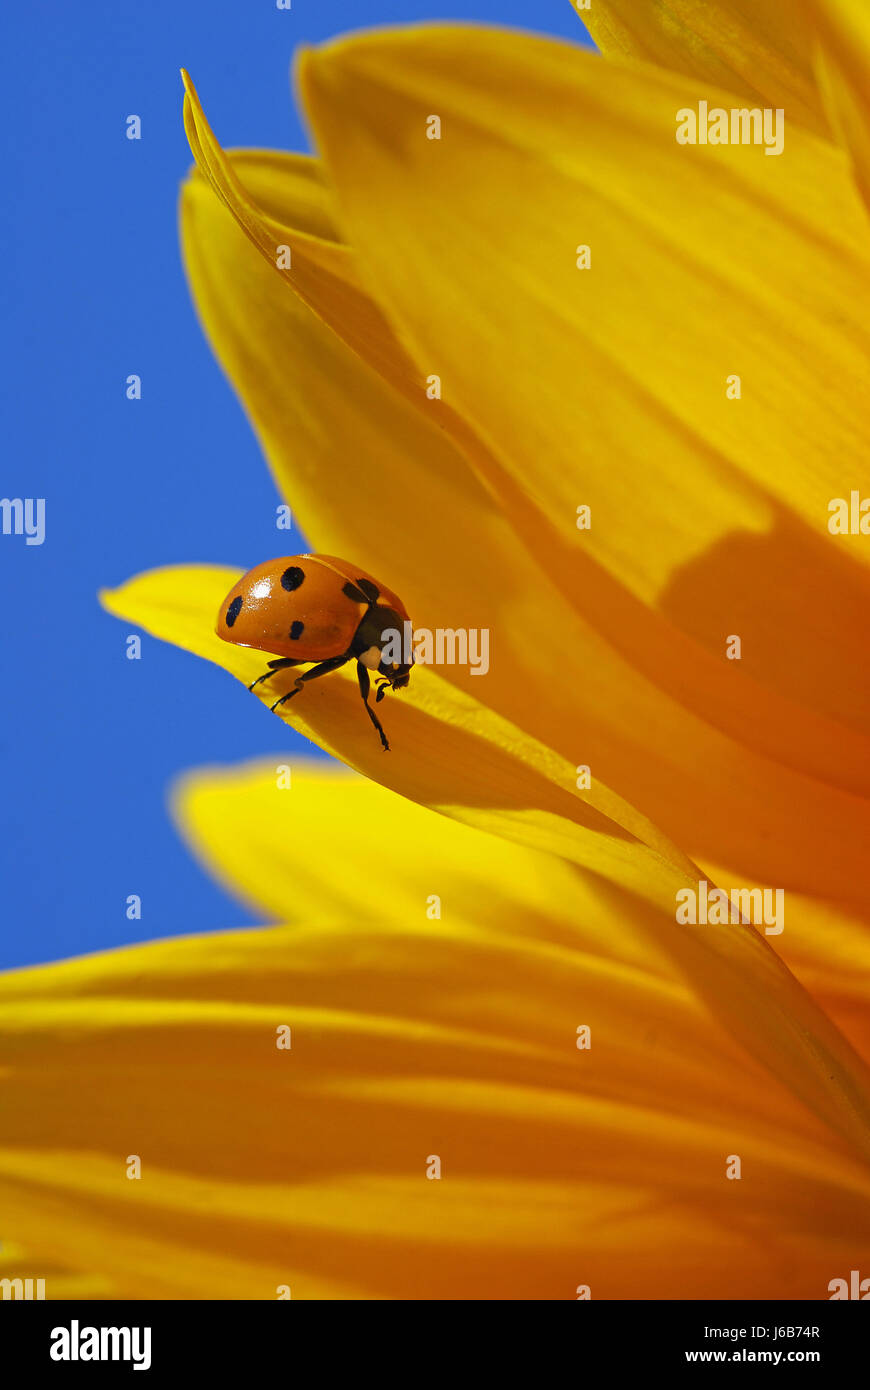 ladybug on yellow sunflower Stock Photo